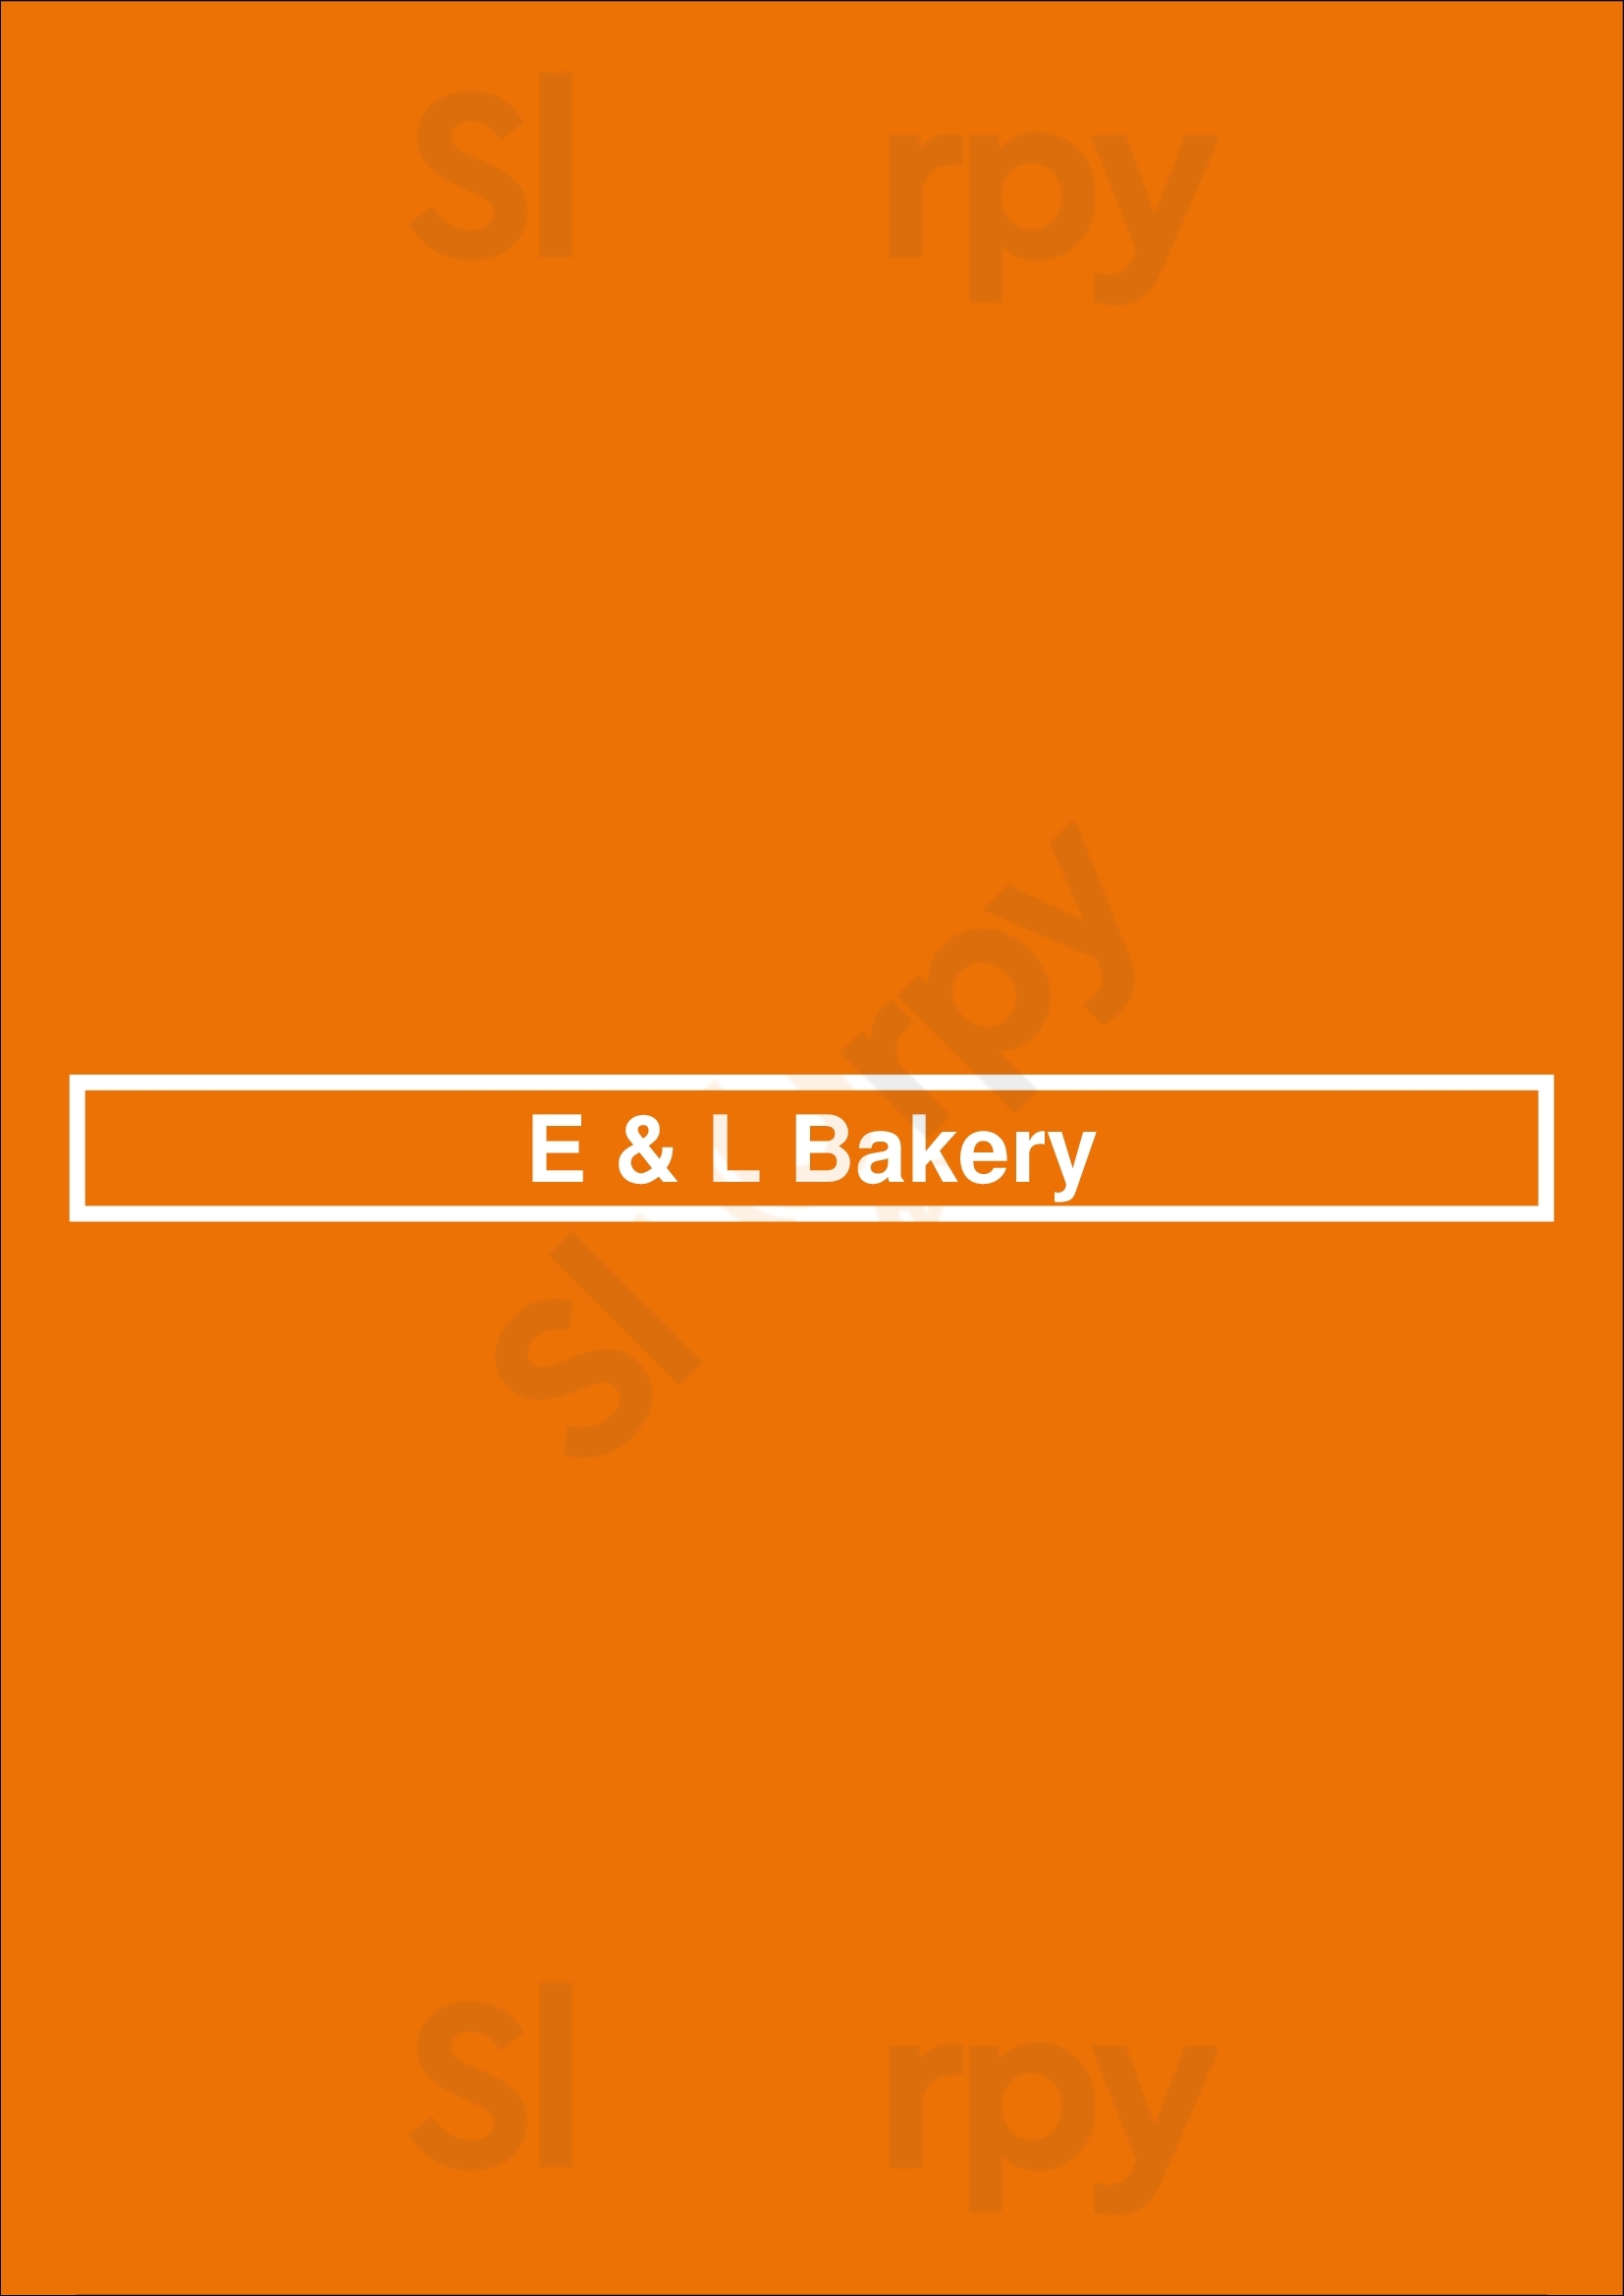 E & L Bakery Bronx Menu - 1